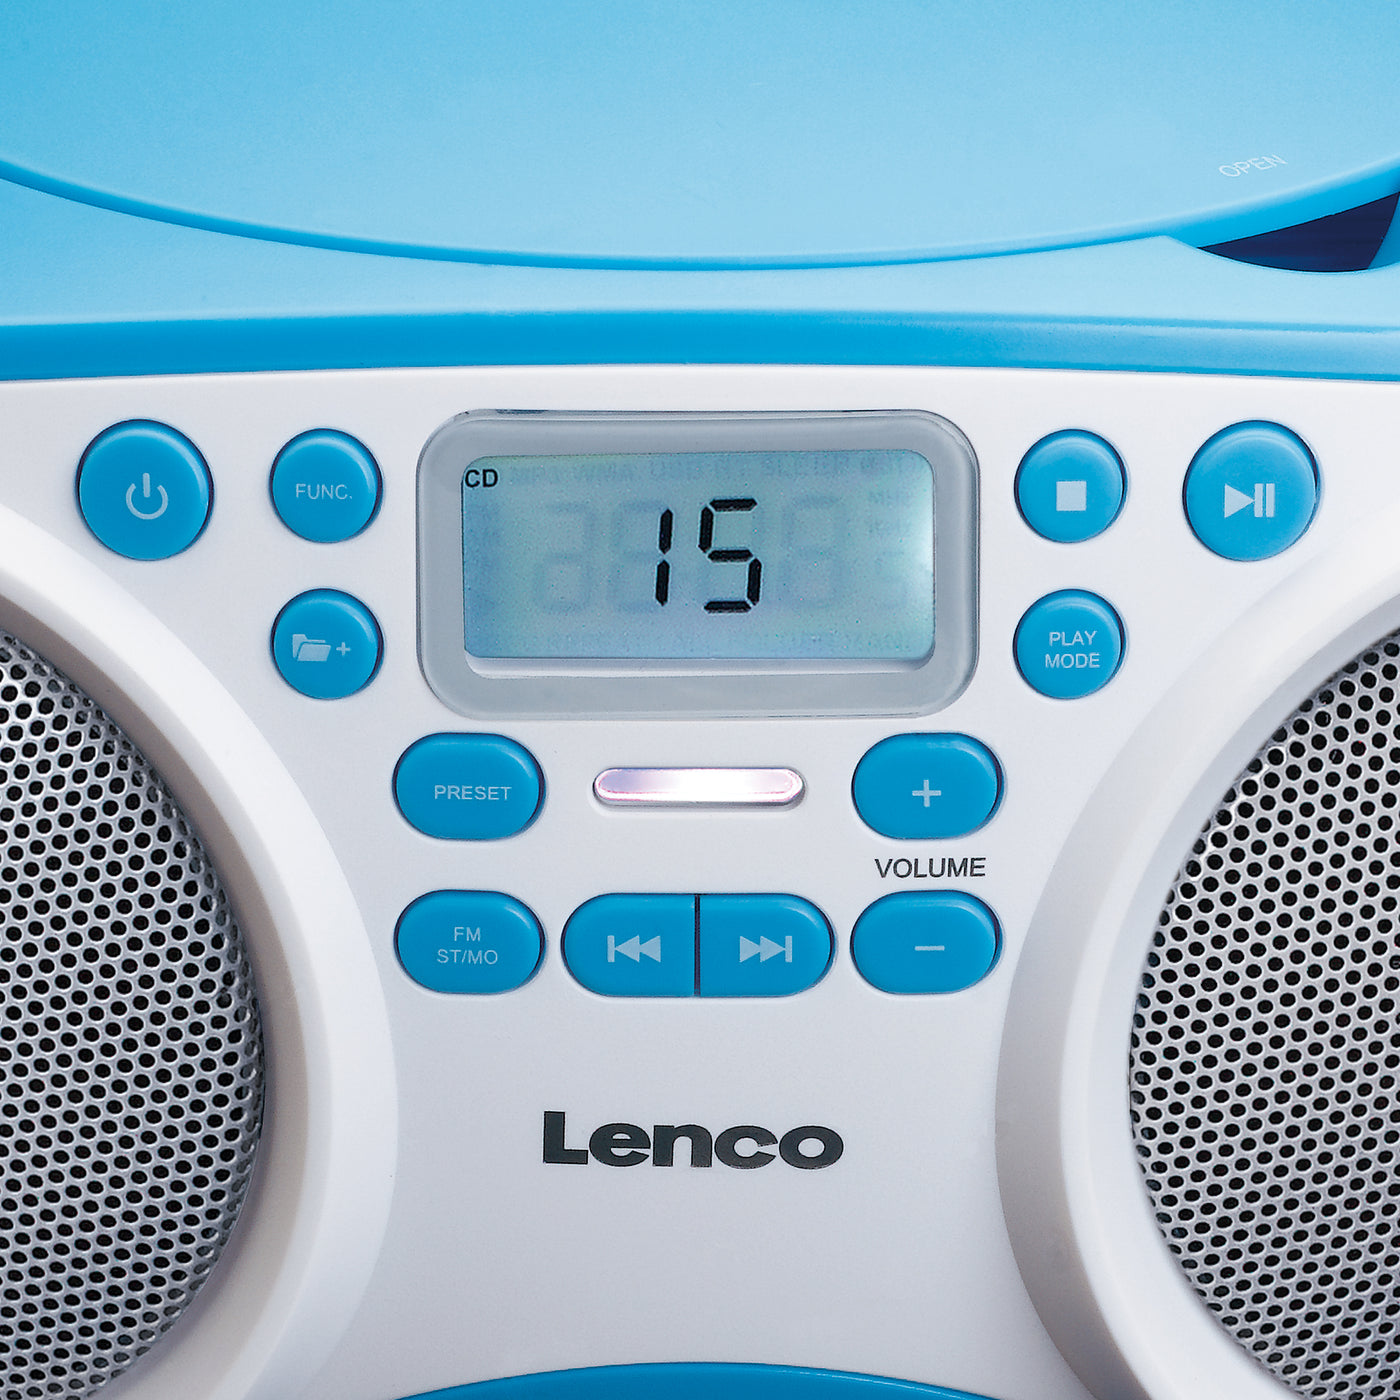 LENCO SCD-200BU - Radio CD Player with MP3 and USB function - Blue – Lenco -Catalog